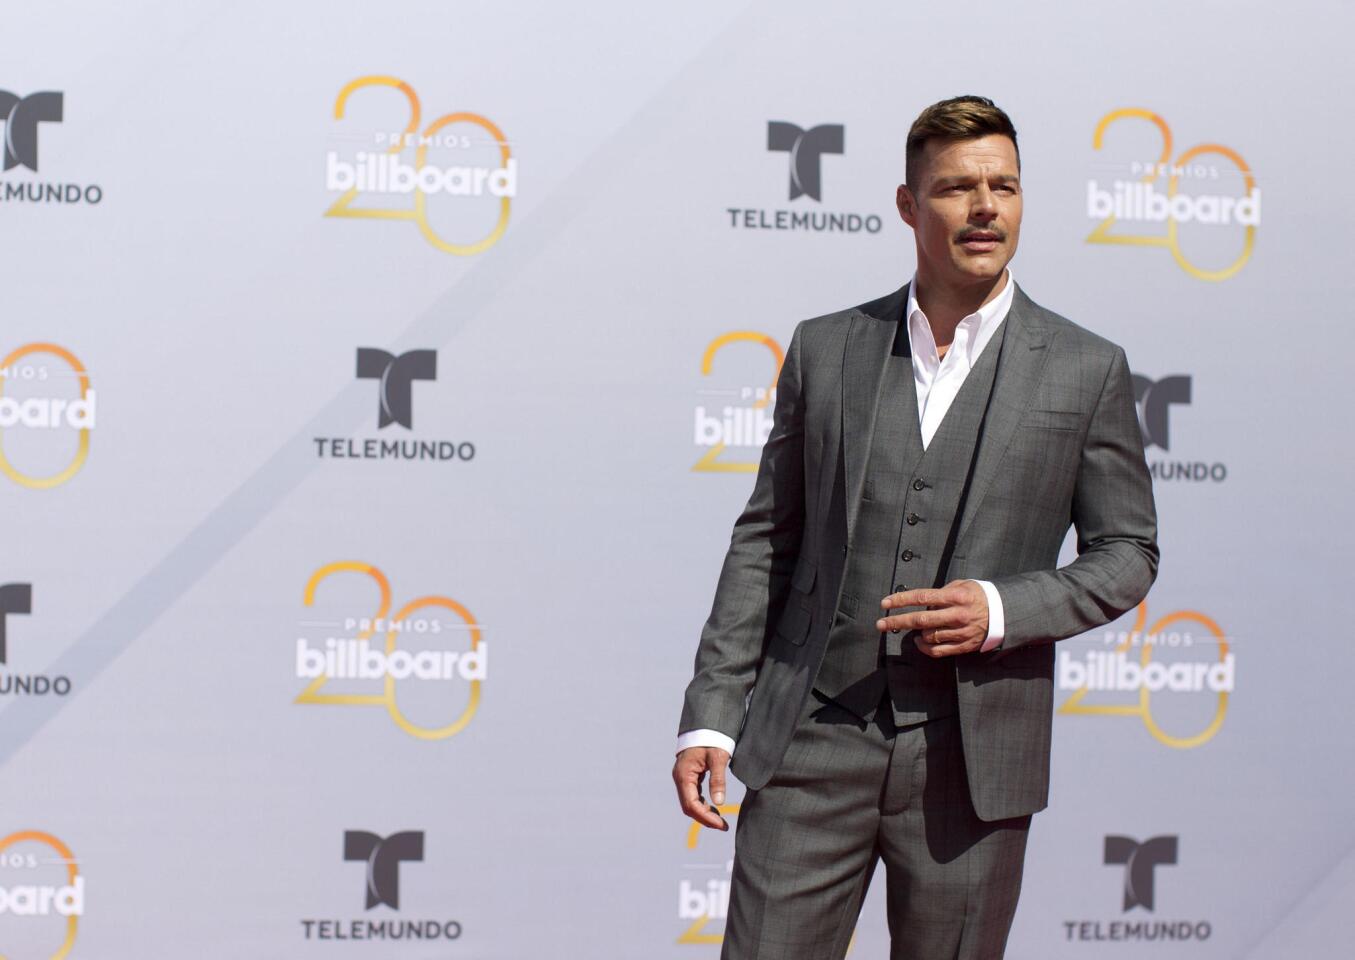 Alfombra roja de los premios Billboard a la música latina